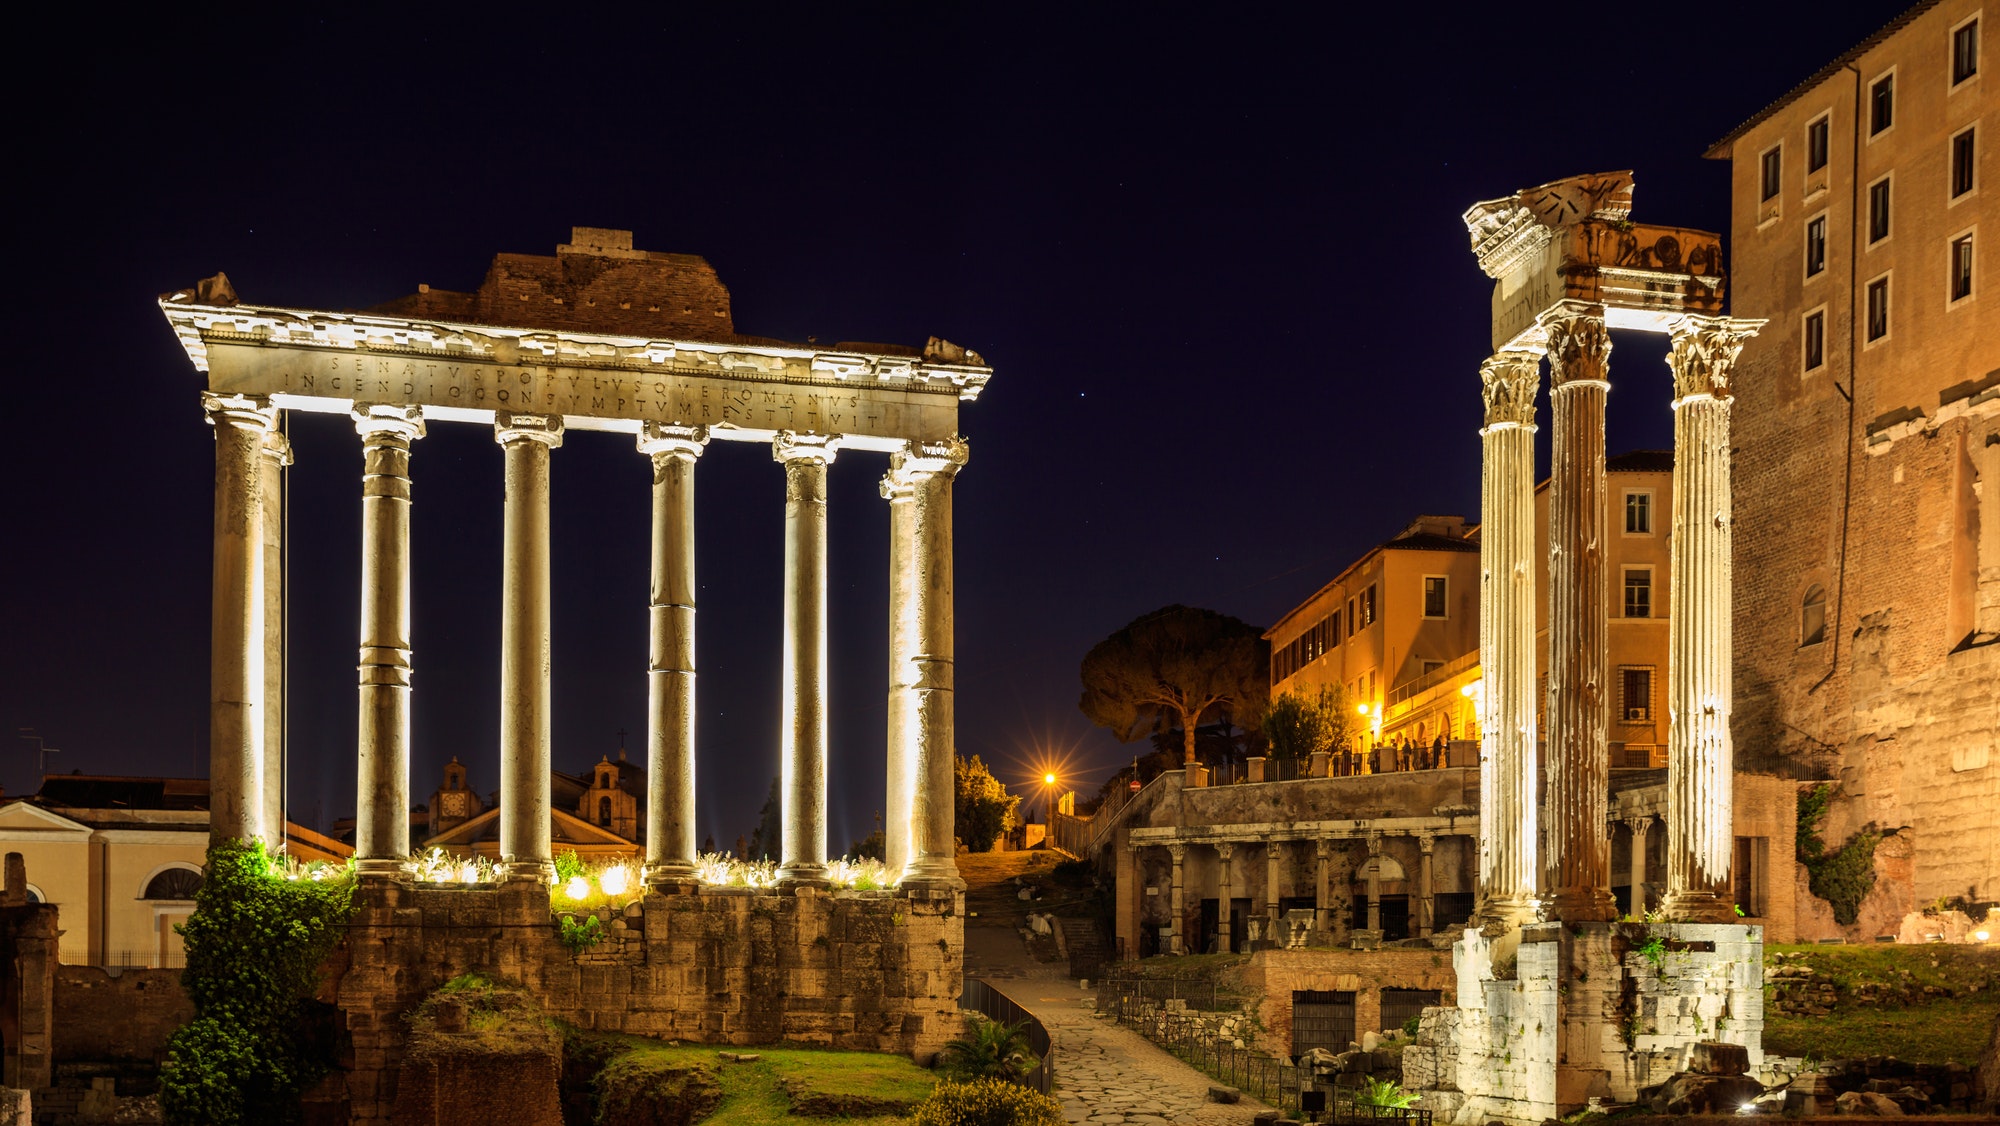 Temple of Saturn in Roman Forum - Rome